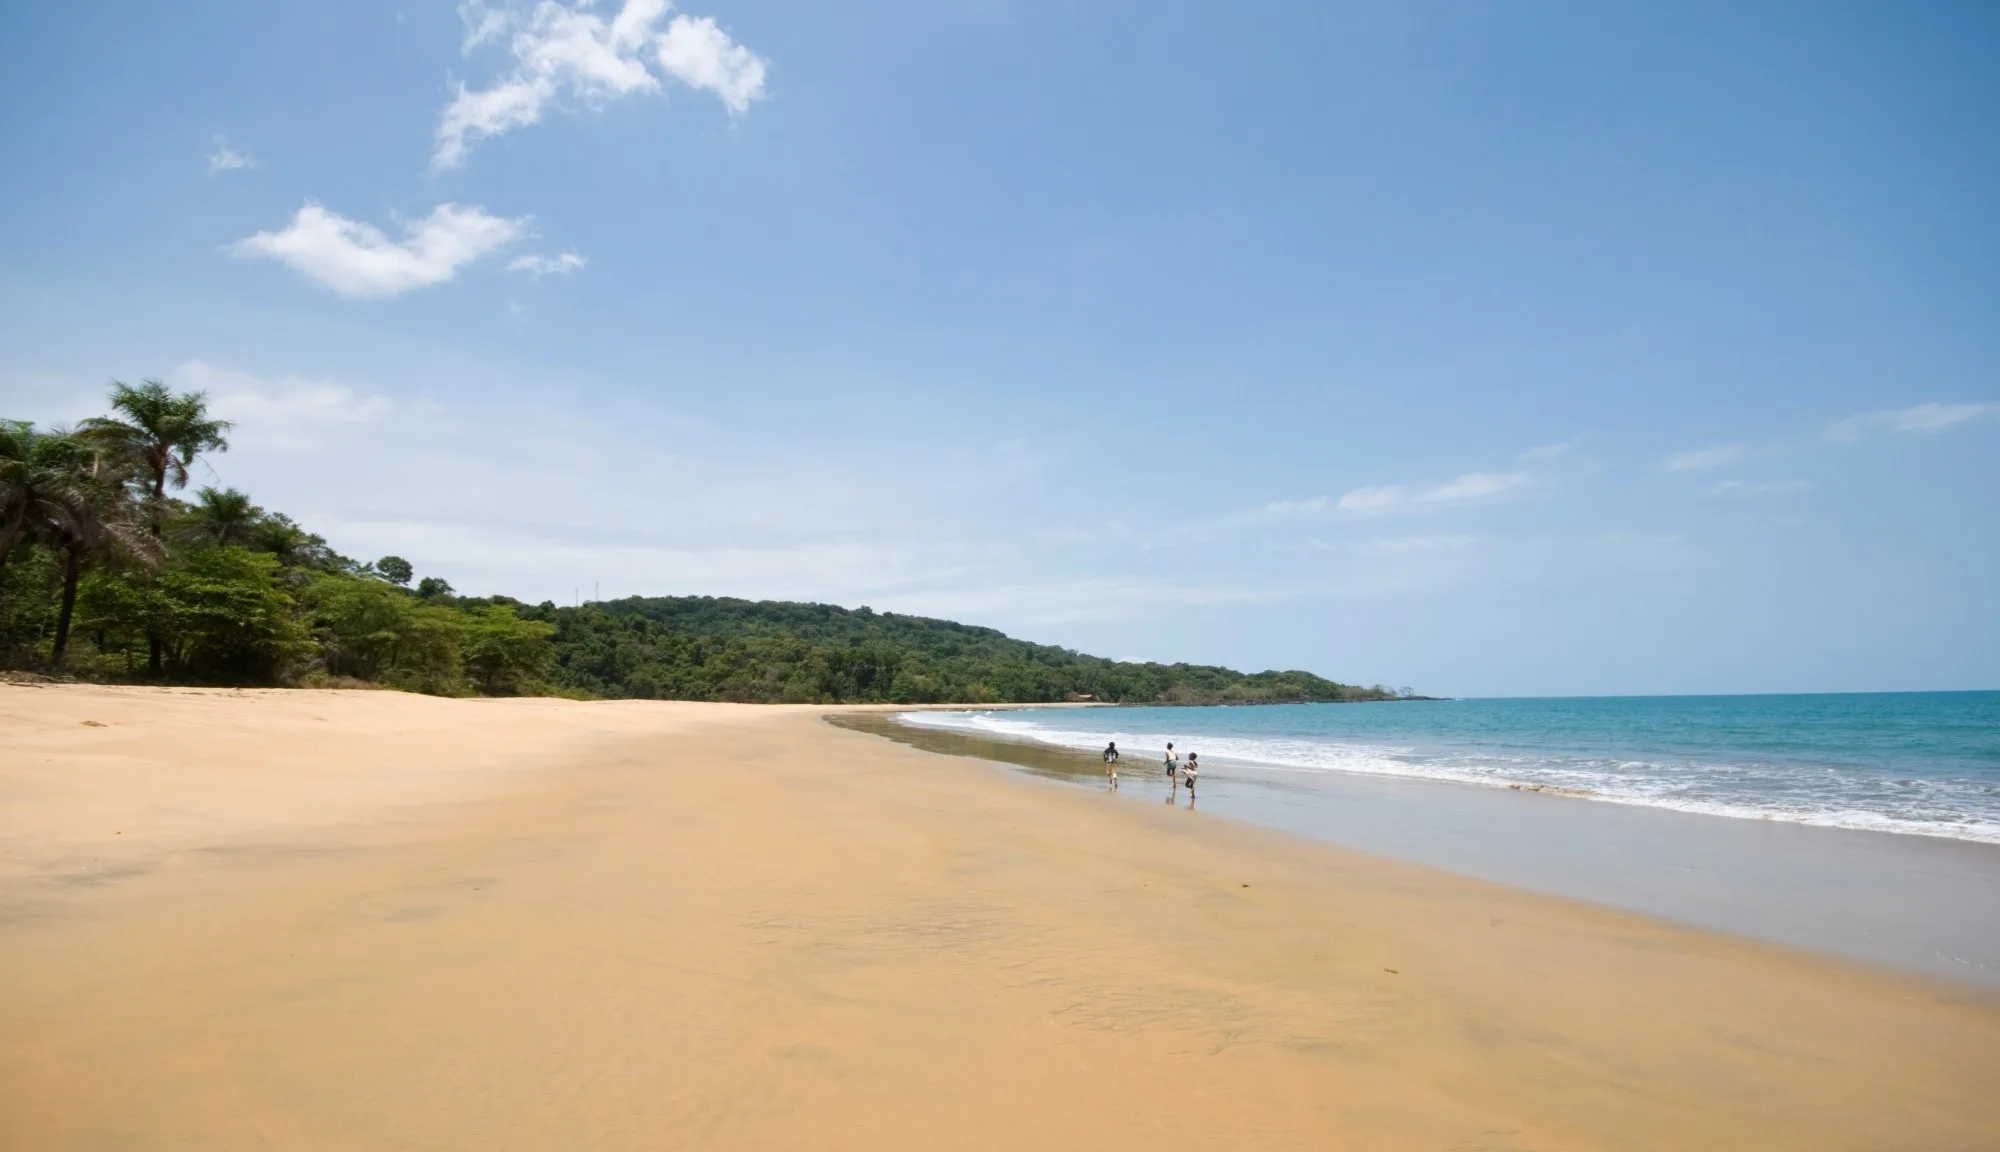 Beaches in Sierra Leone